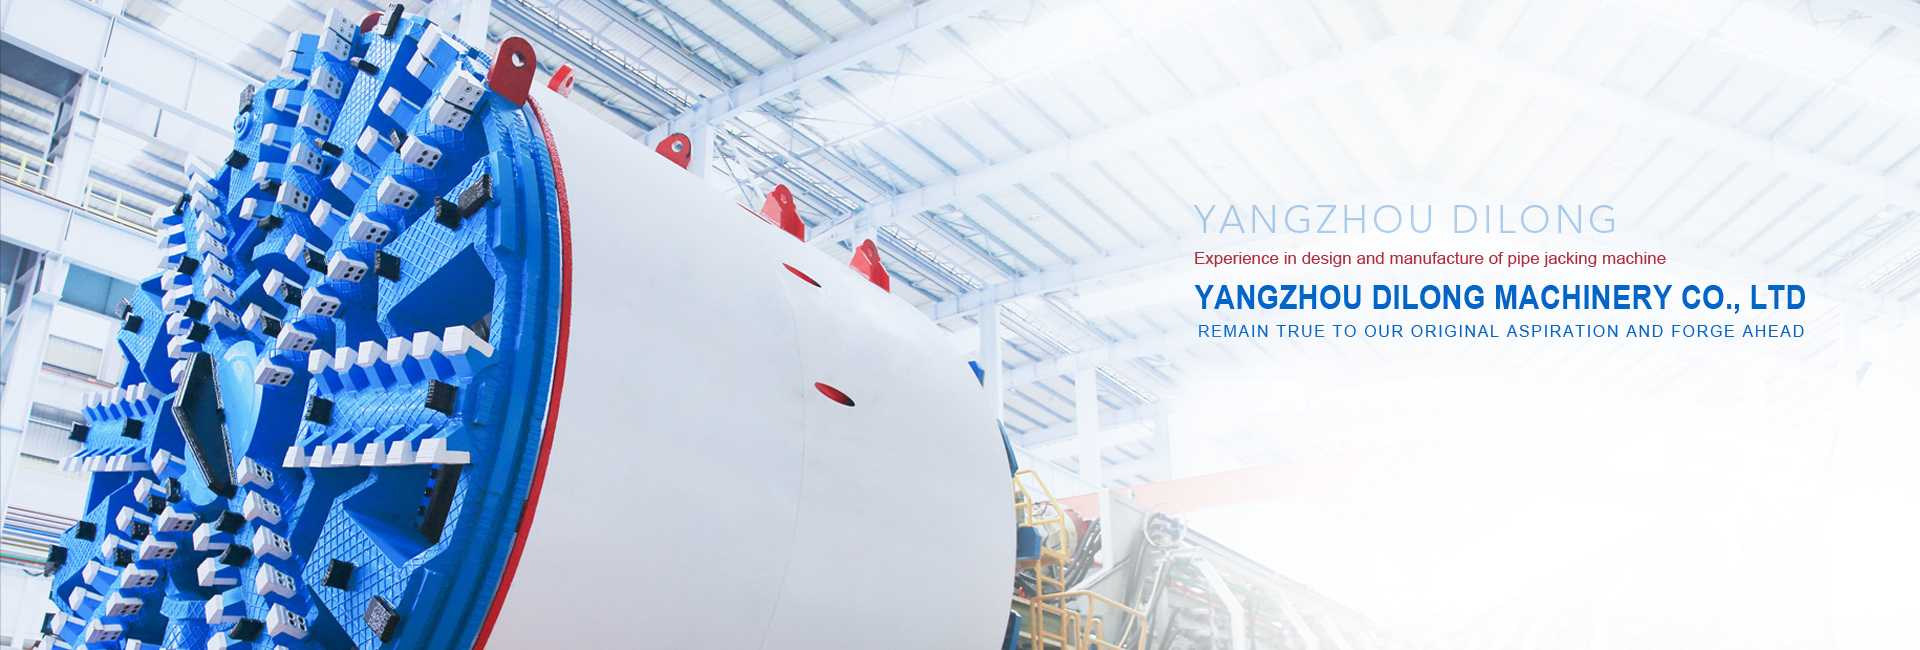 Yangzhou Dilong Machinery Co., Ltd.